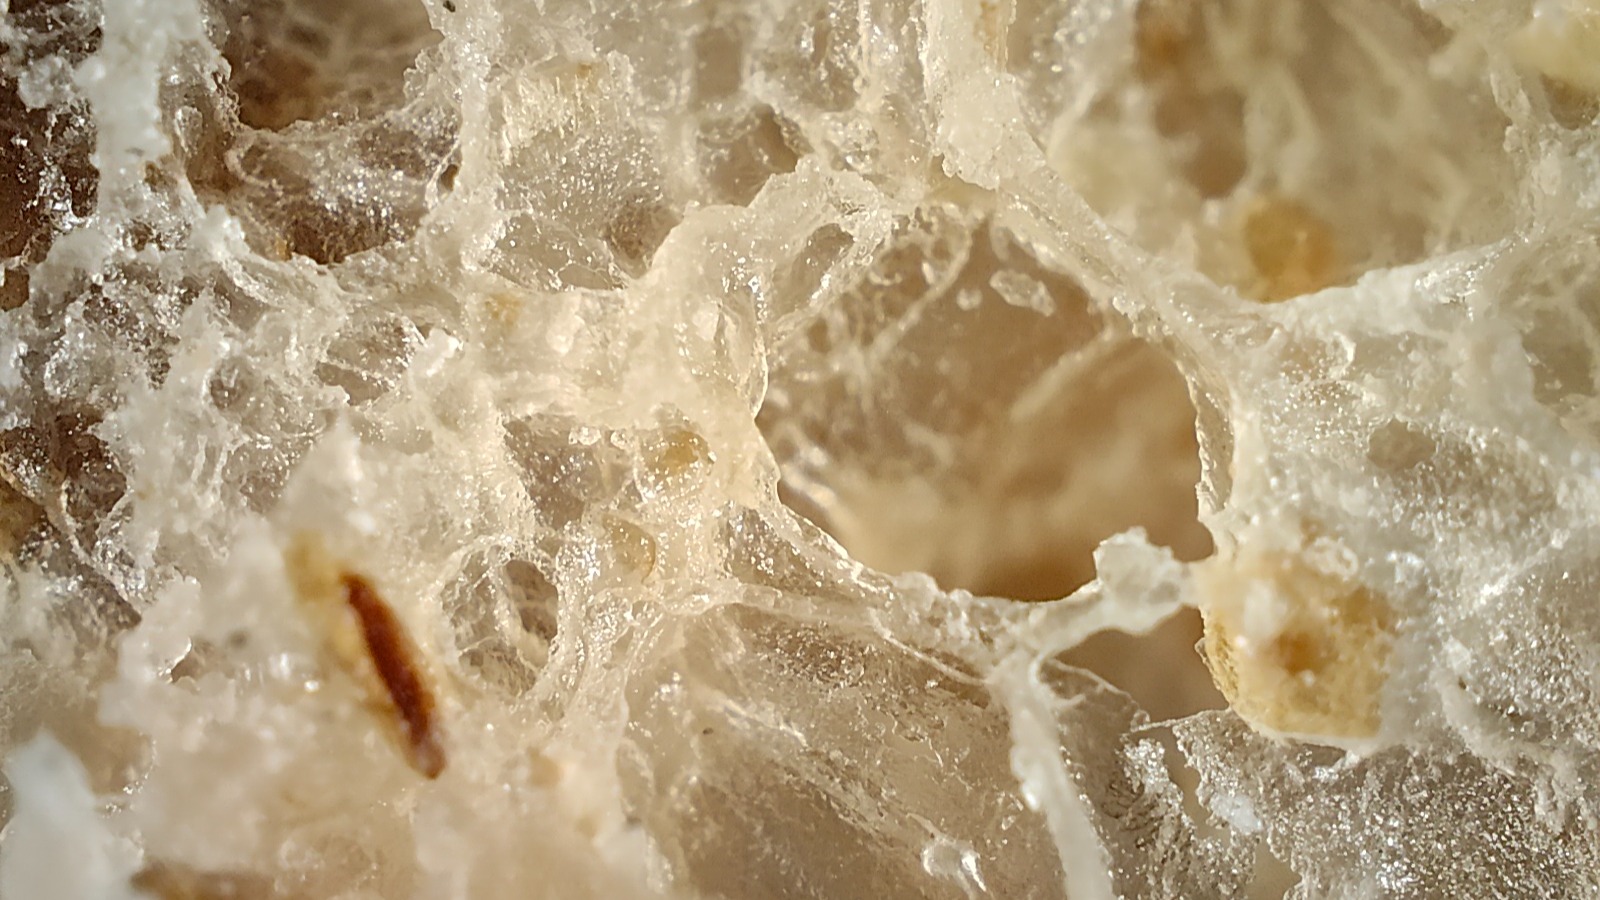 Microscopic picture of bread taken using the Realme GT 2 Pro